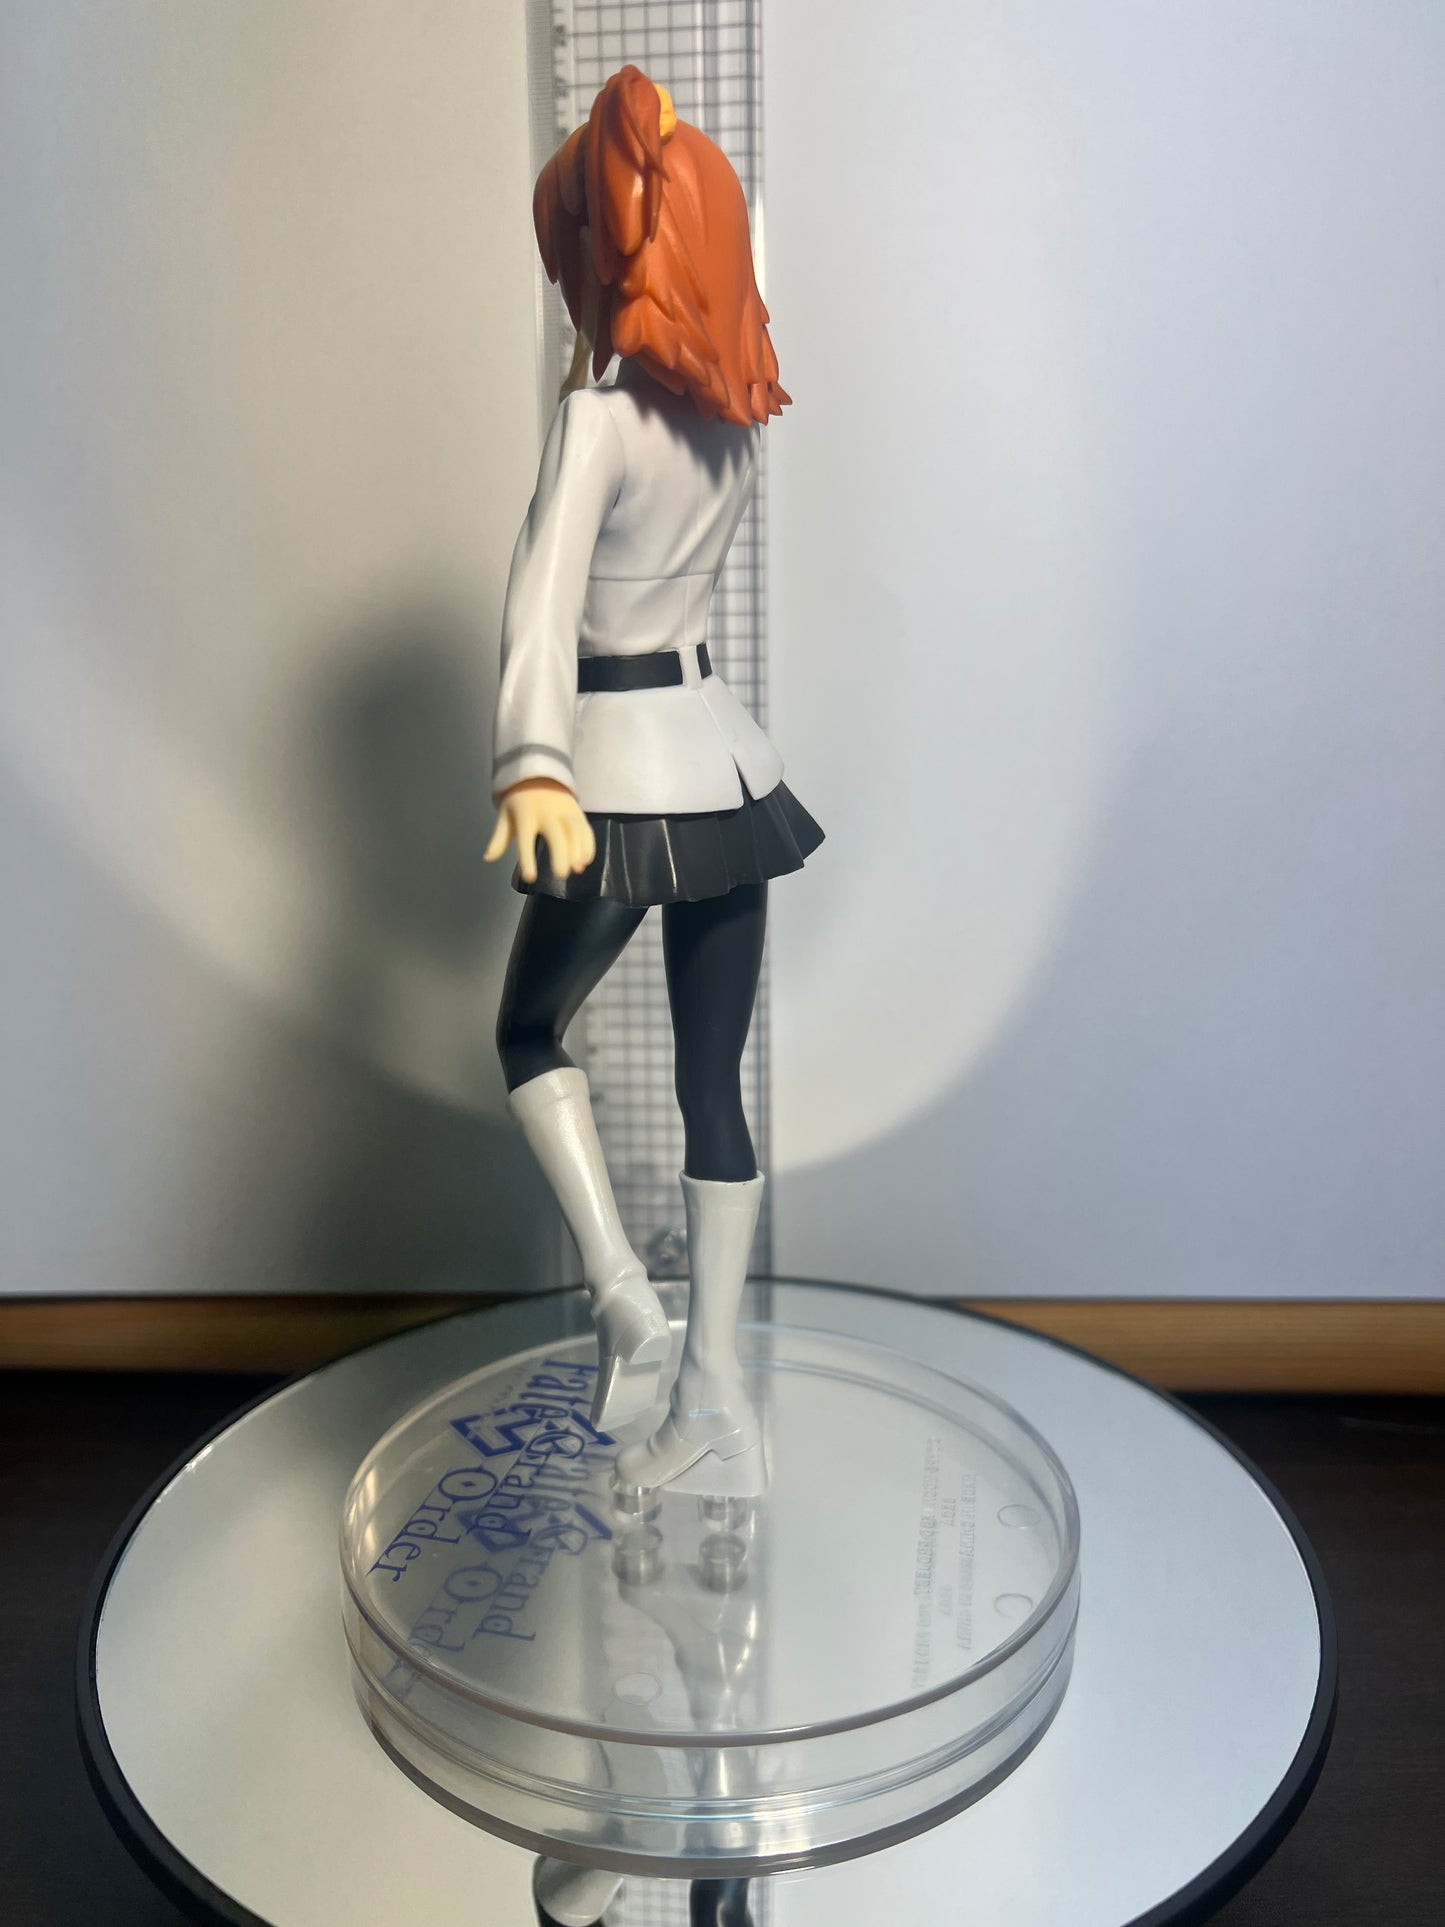 Fate/Grand Order SPM Protagonist Female 23cm Jamma Sega #157